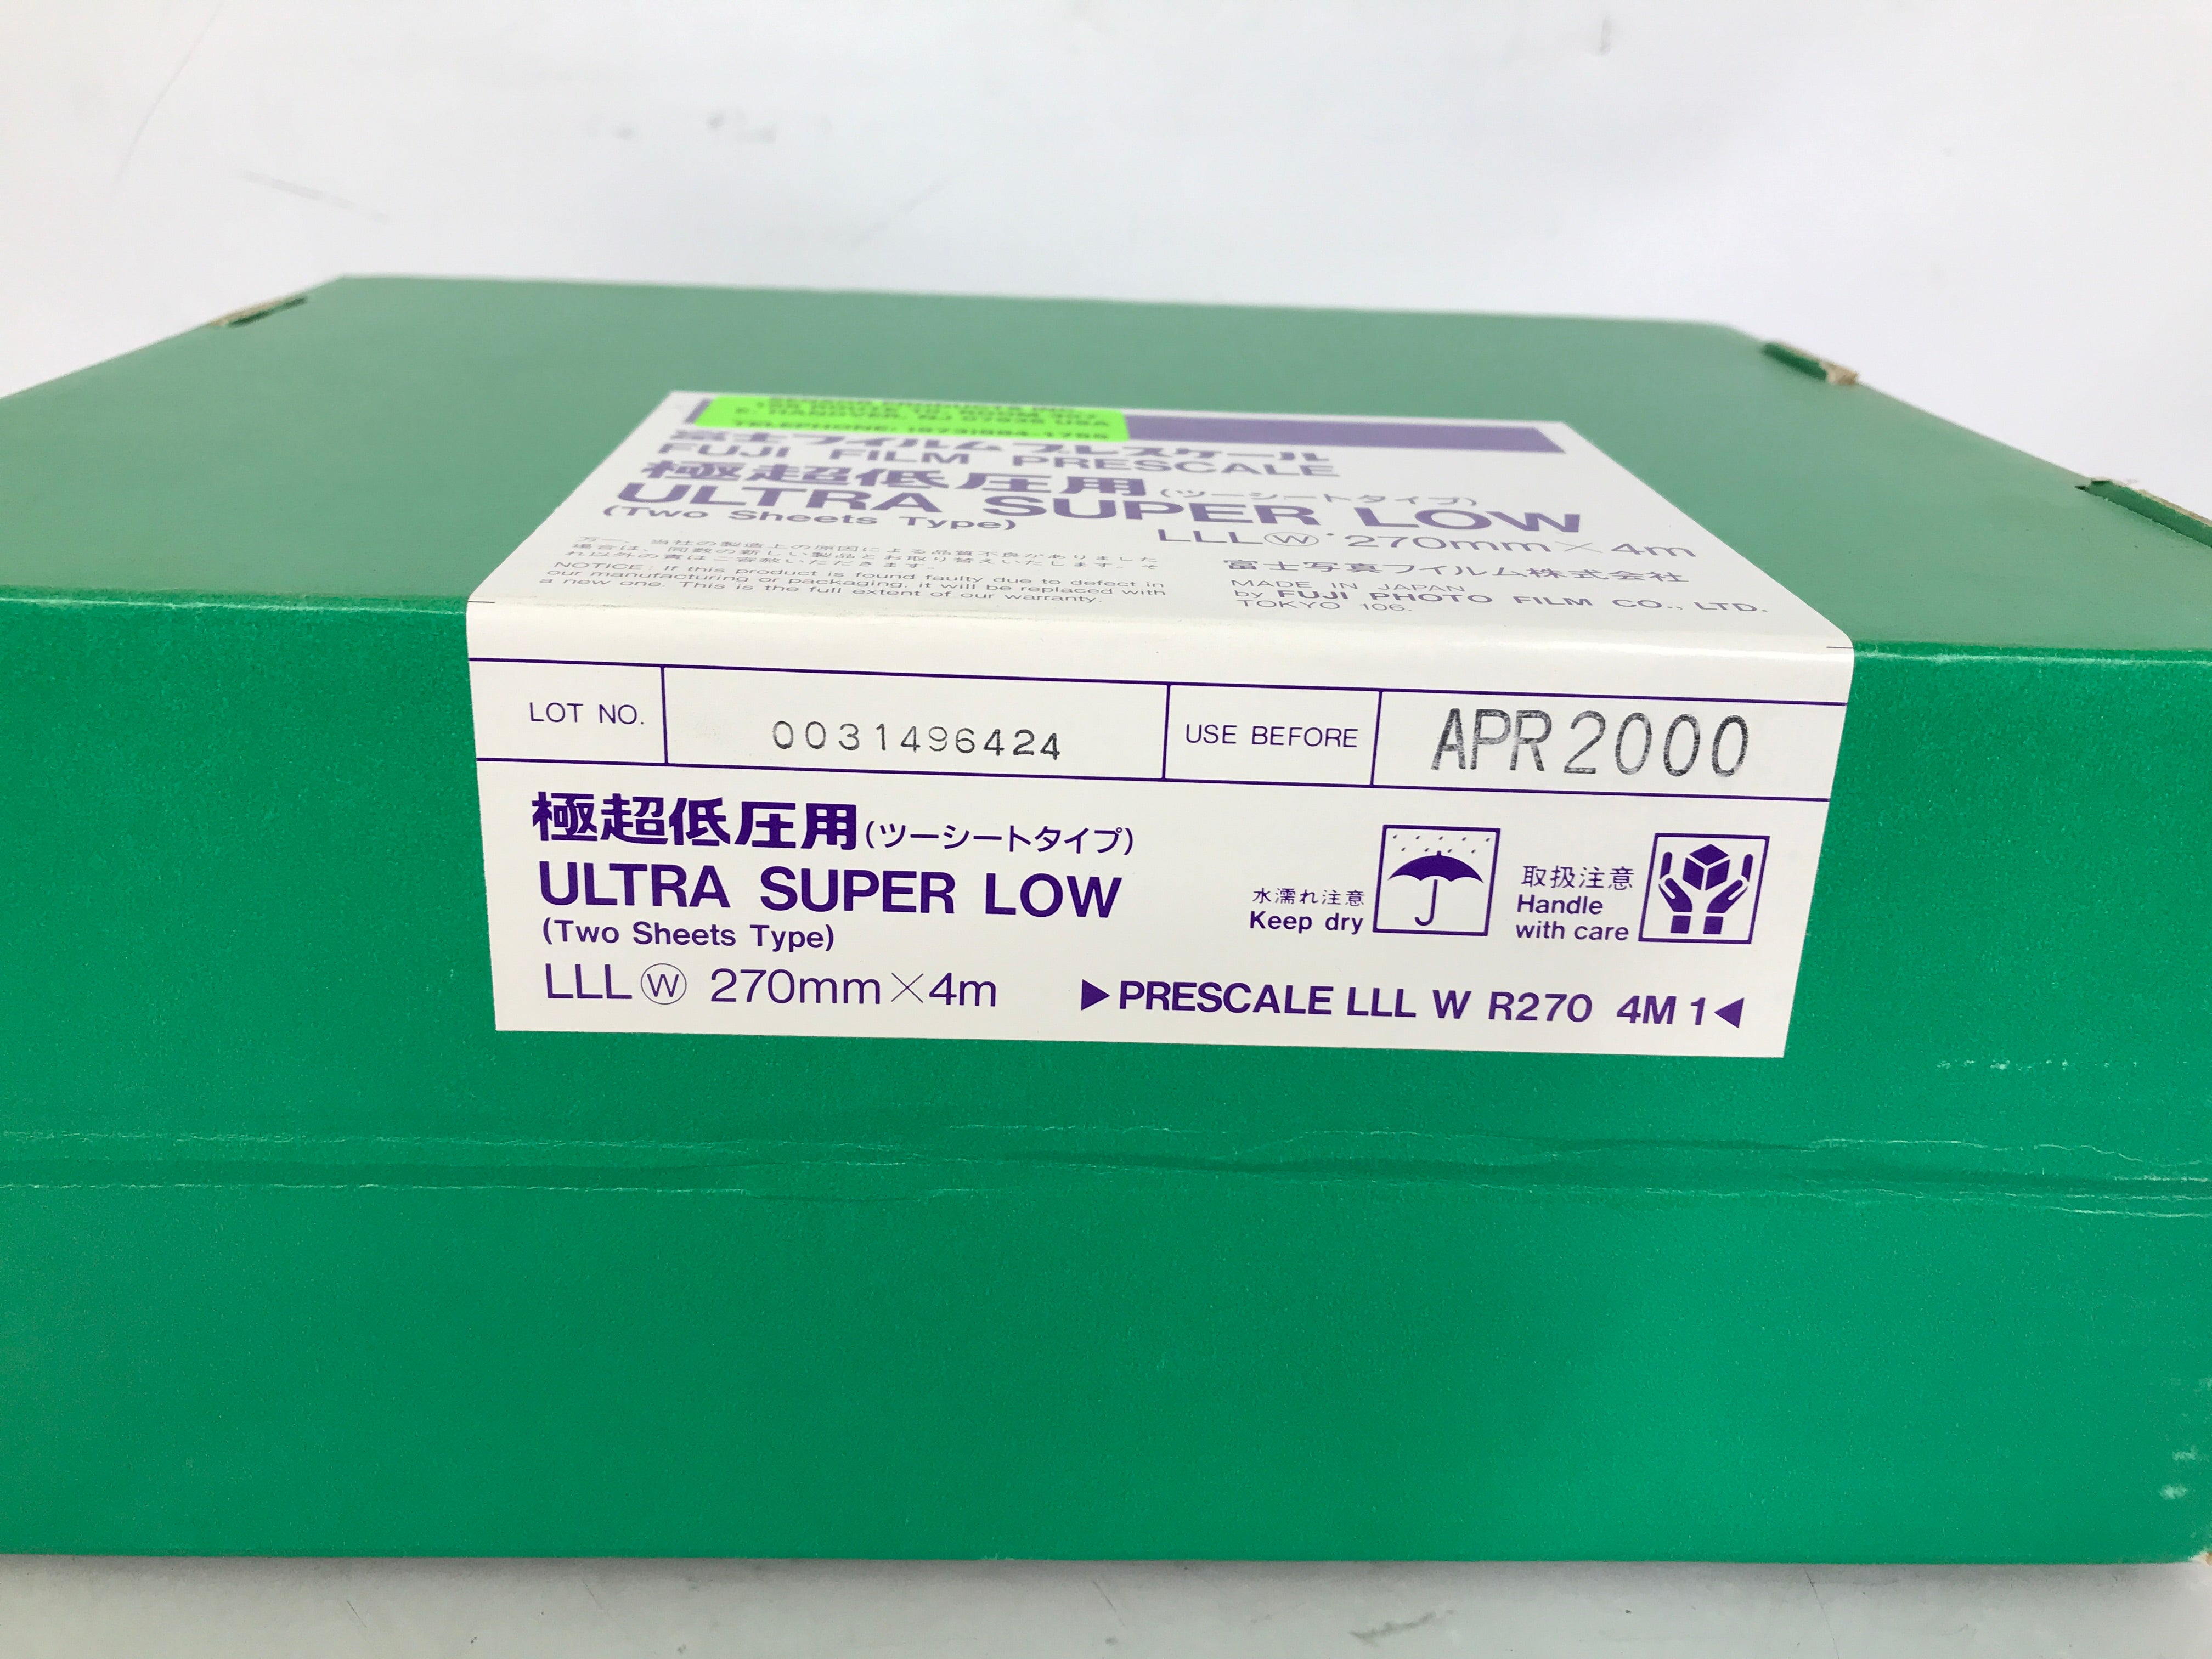 Expired Fuji Film Prescale Ultra Super Low LLLW 270mm x 4m